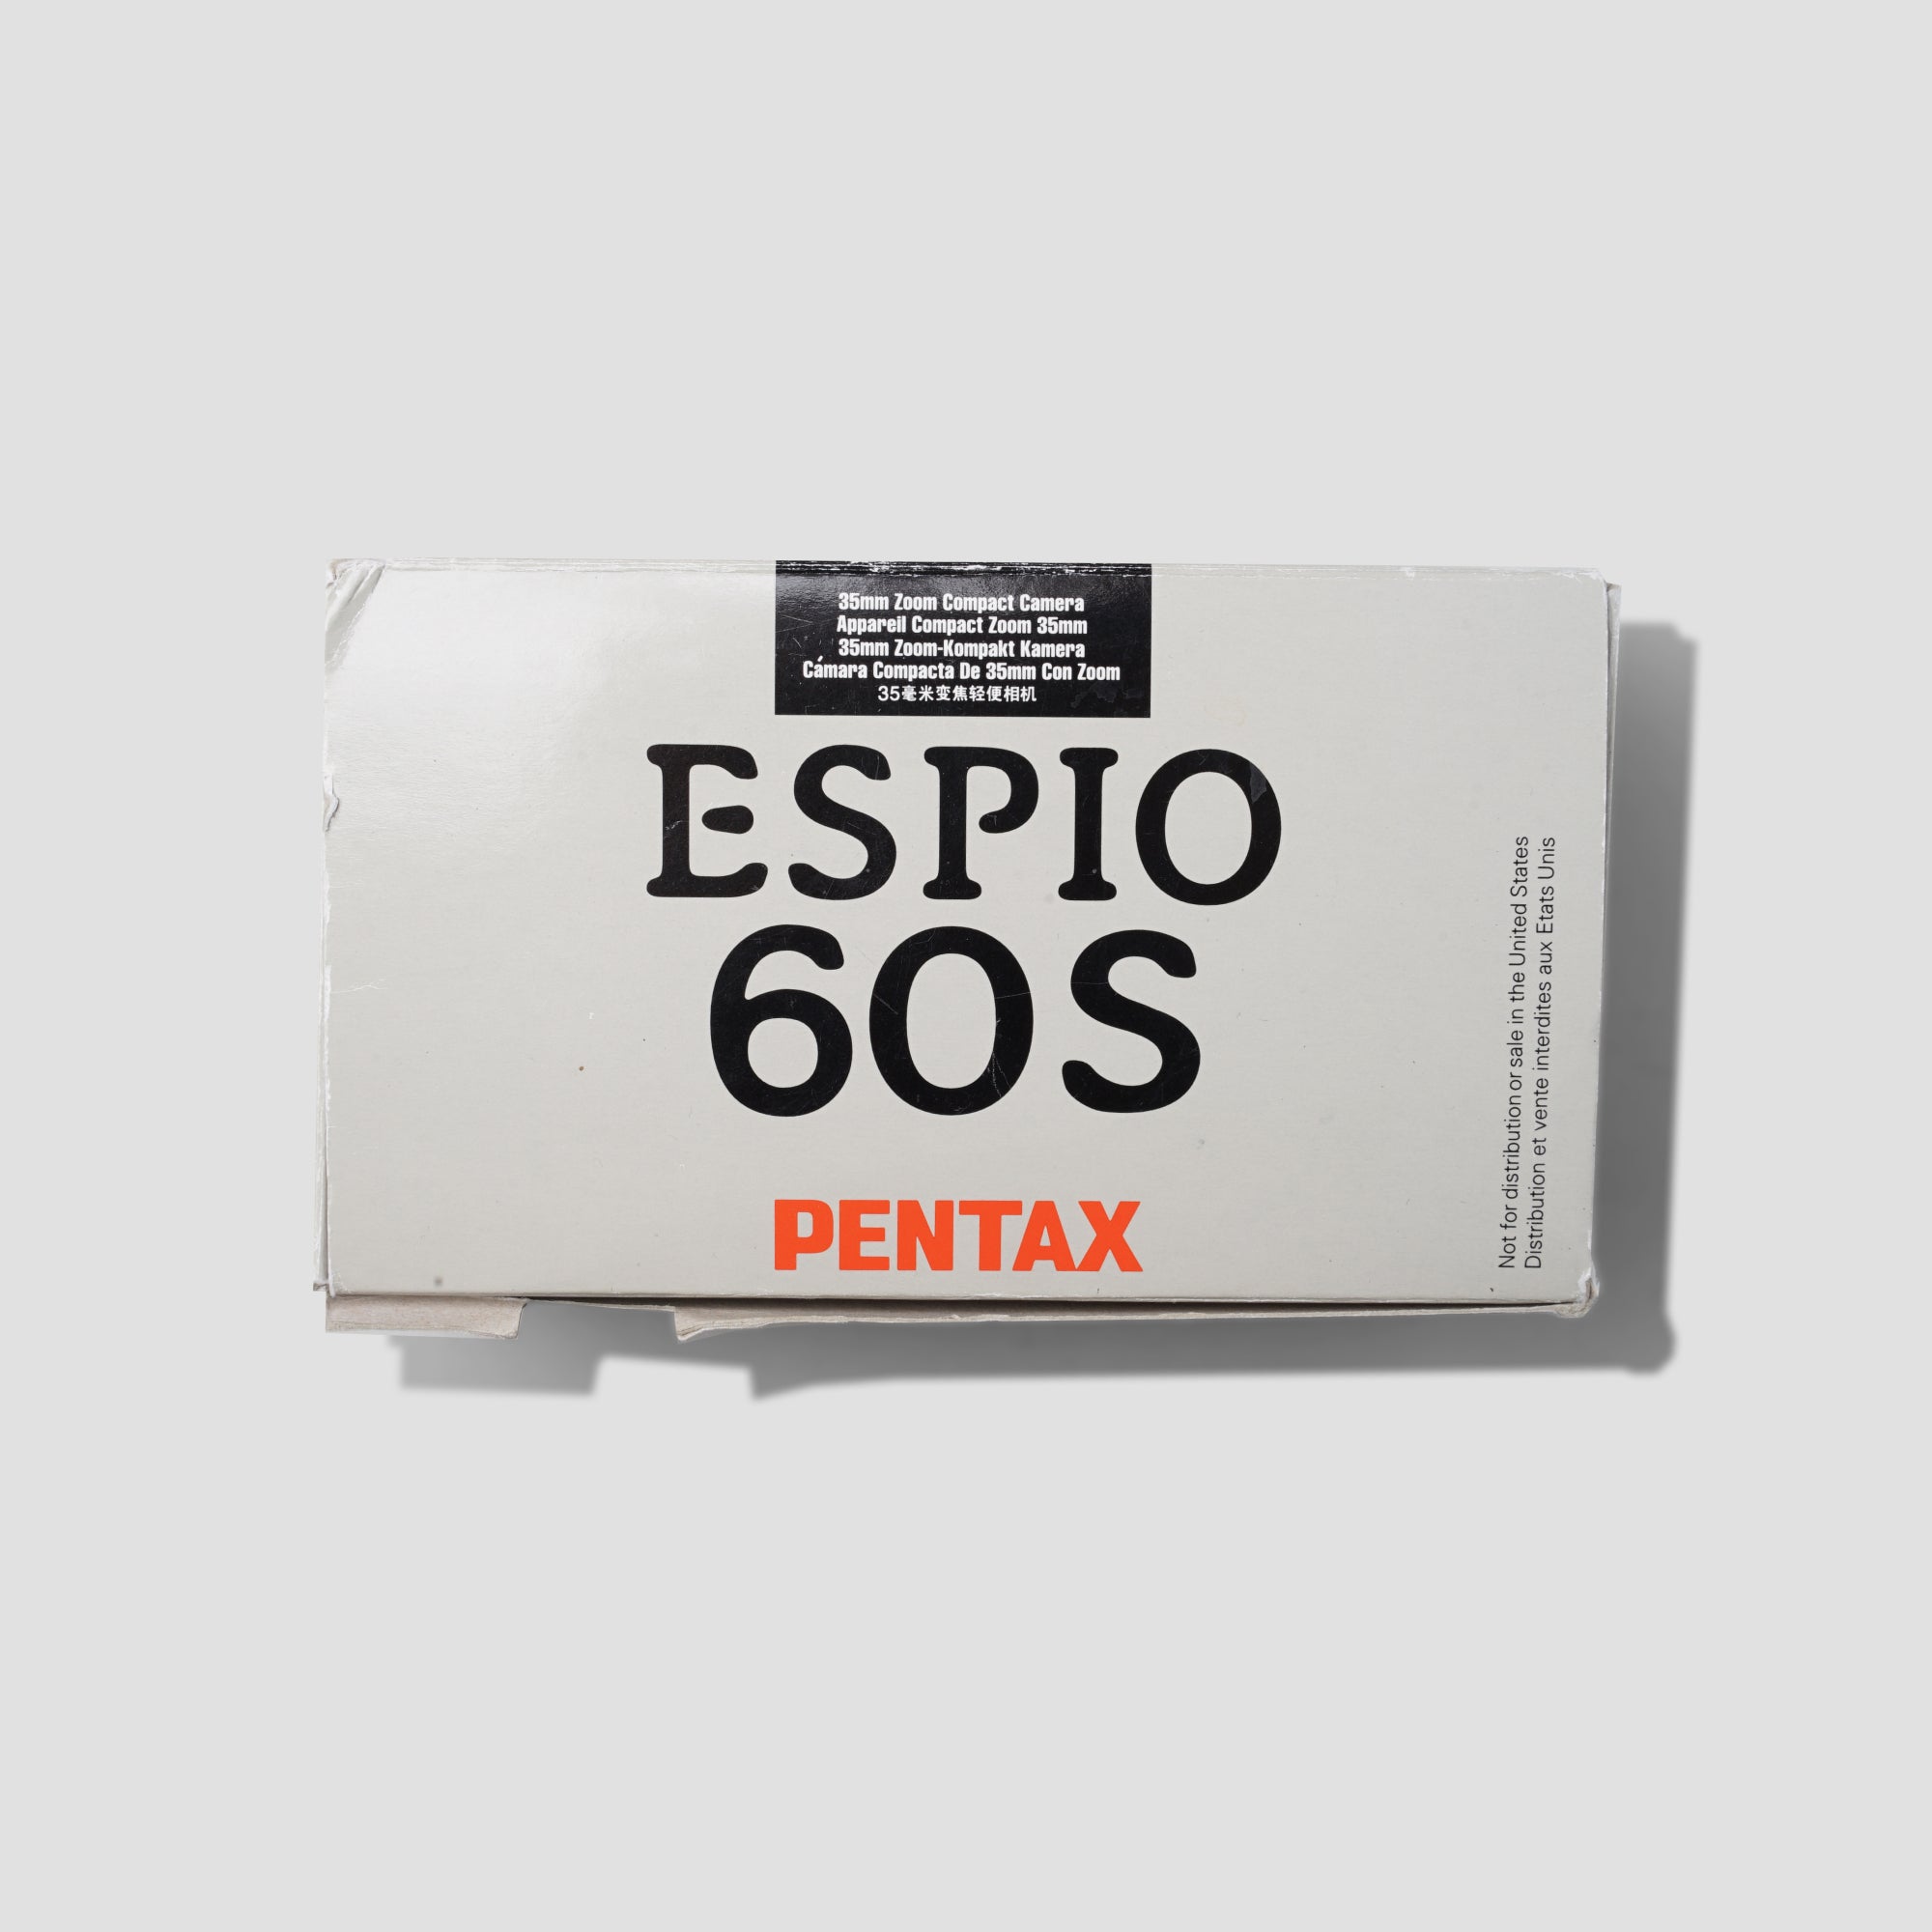 Buy Pentax Espio 60s now at Analogue Amsterdam